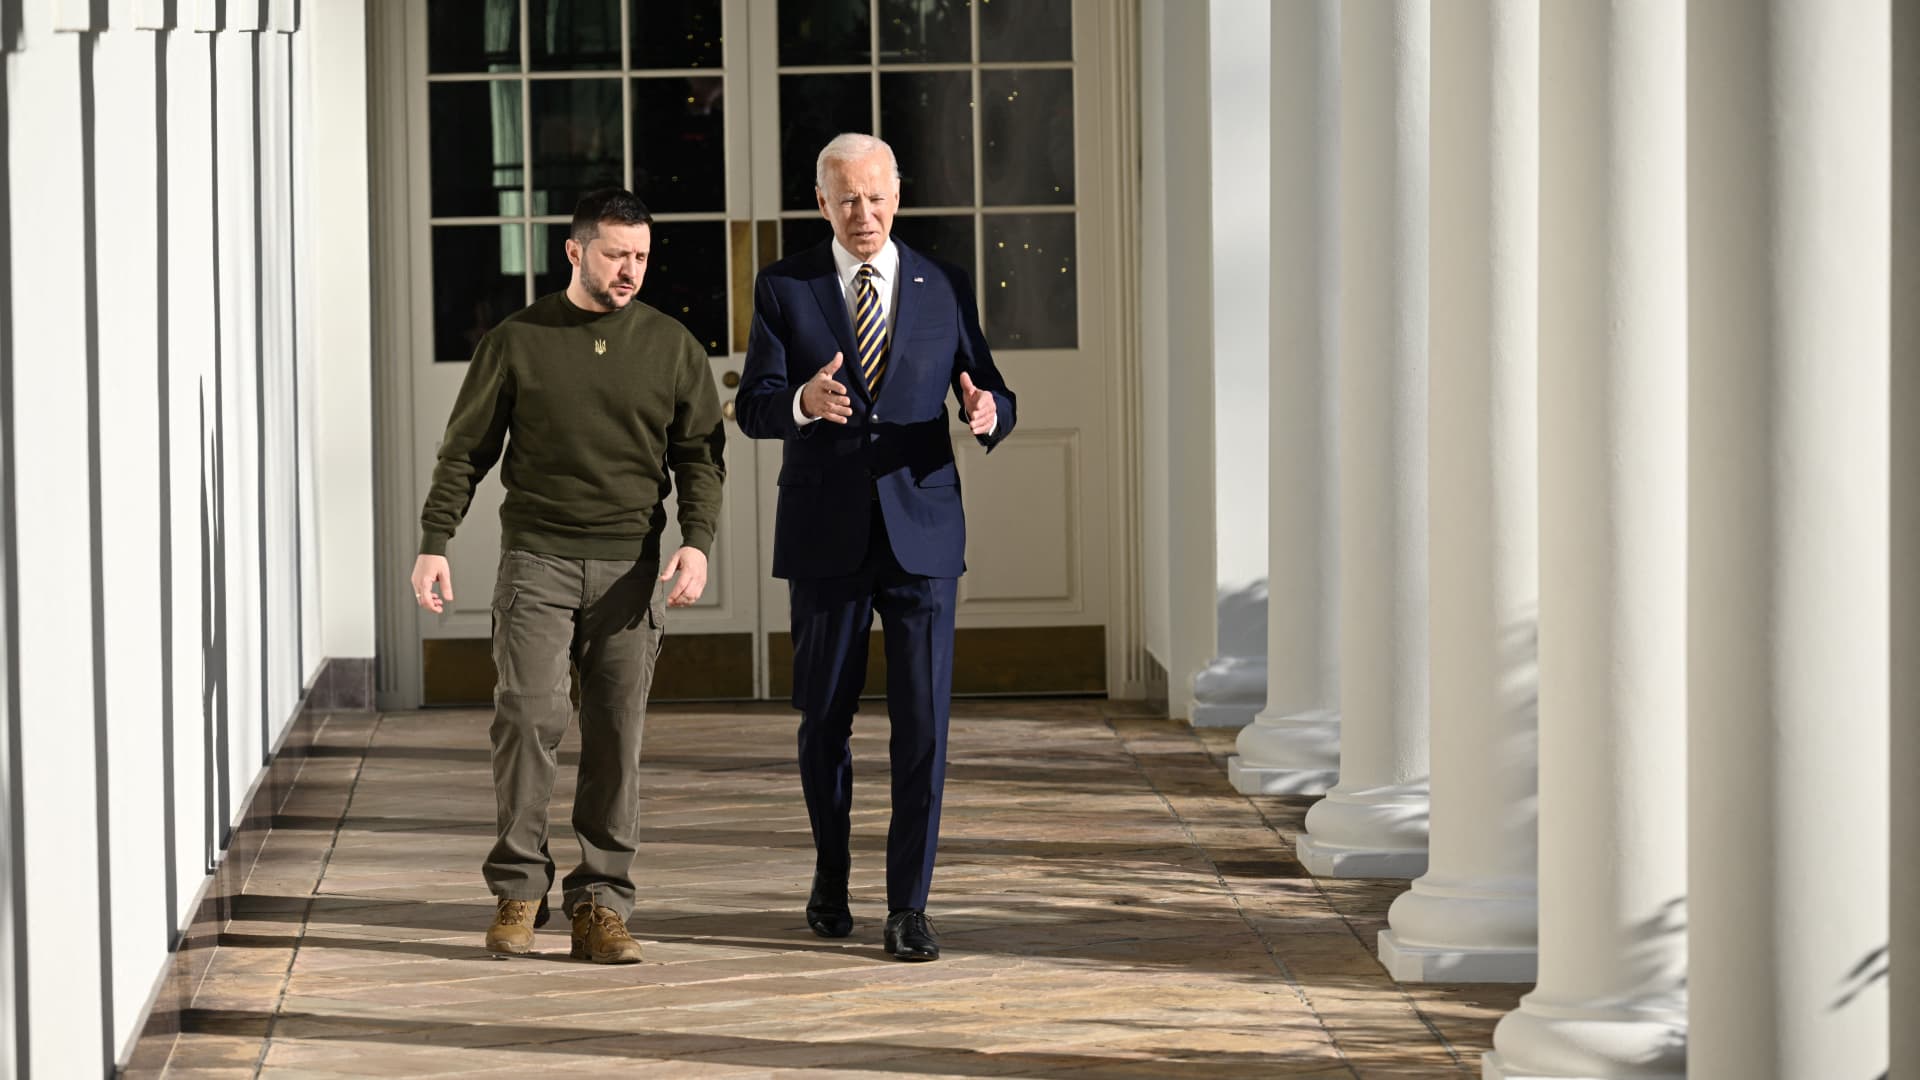 US President Joe Biden walks with Ukraine's President Volodymyr Zelensky through the colonnade of the White House, in Washington, DC on December 21, 2022.